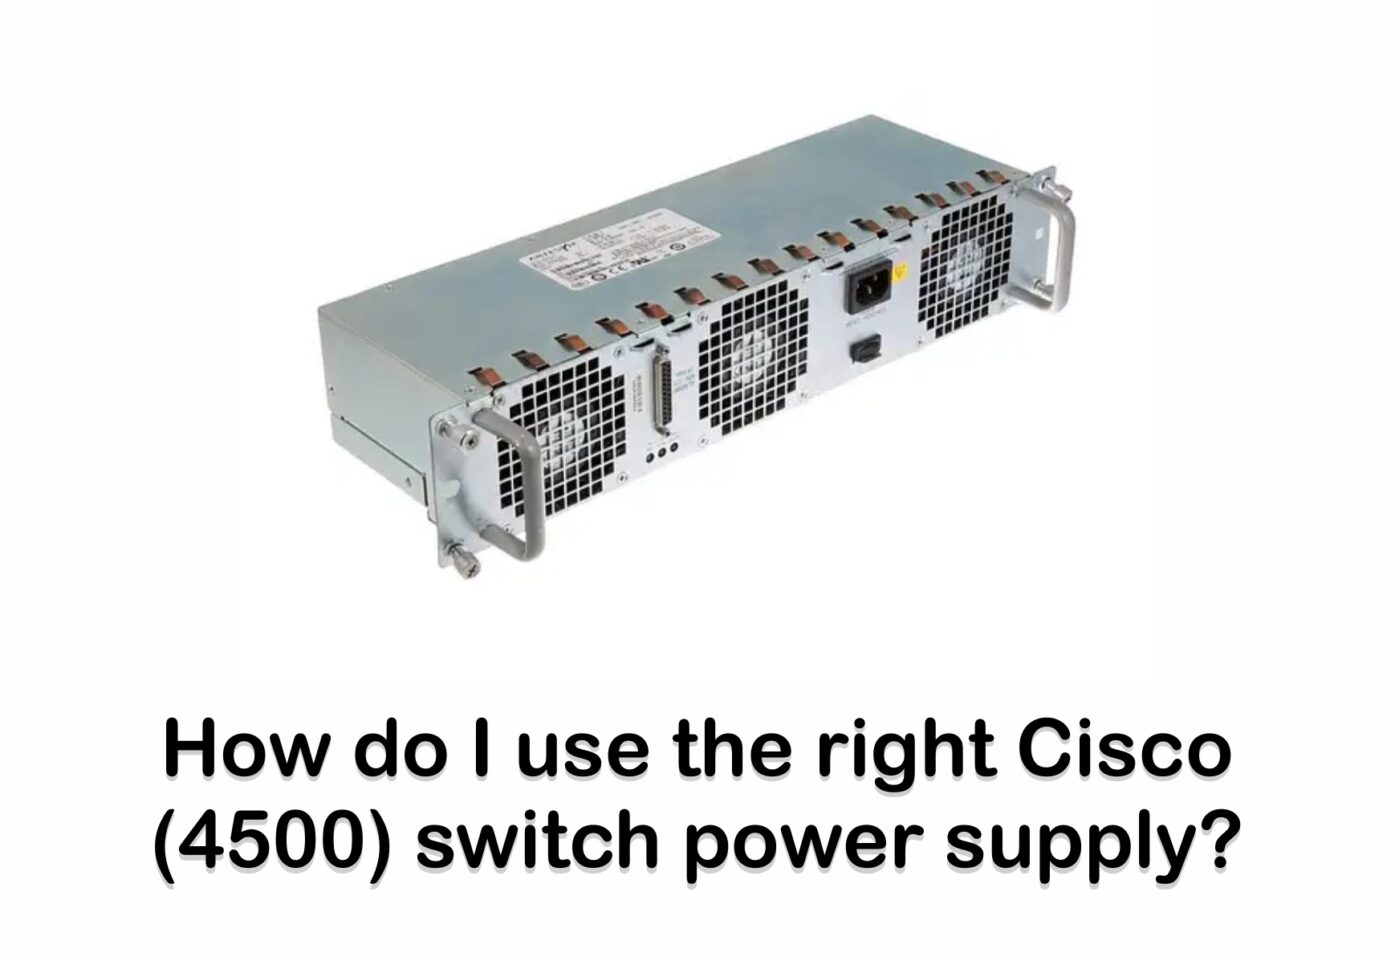 Cisco switch power supply